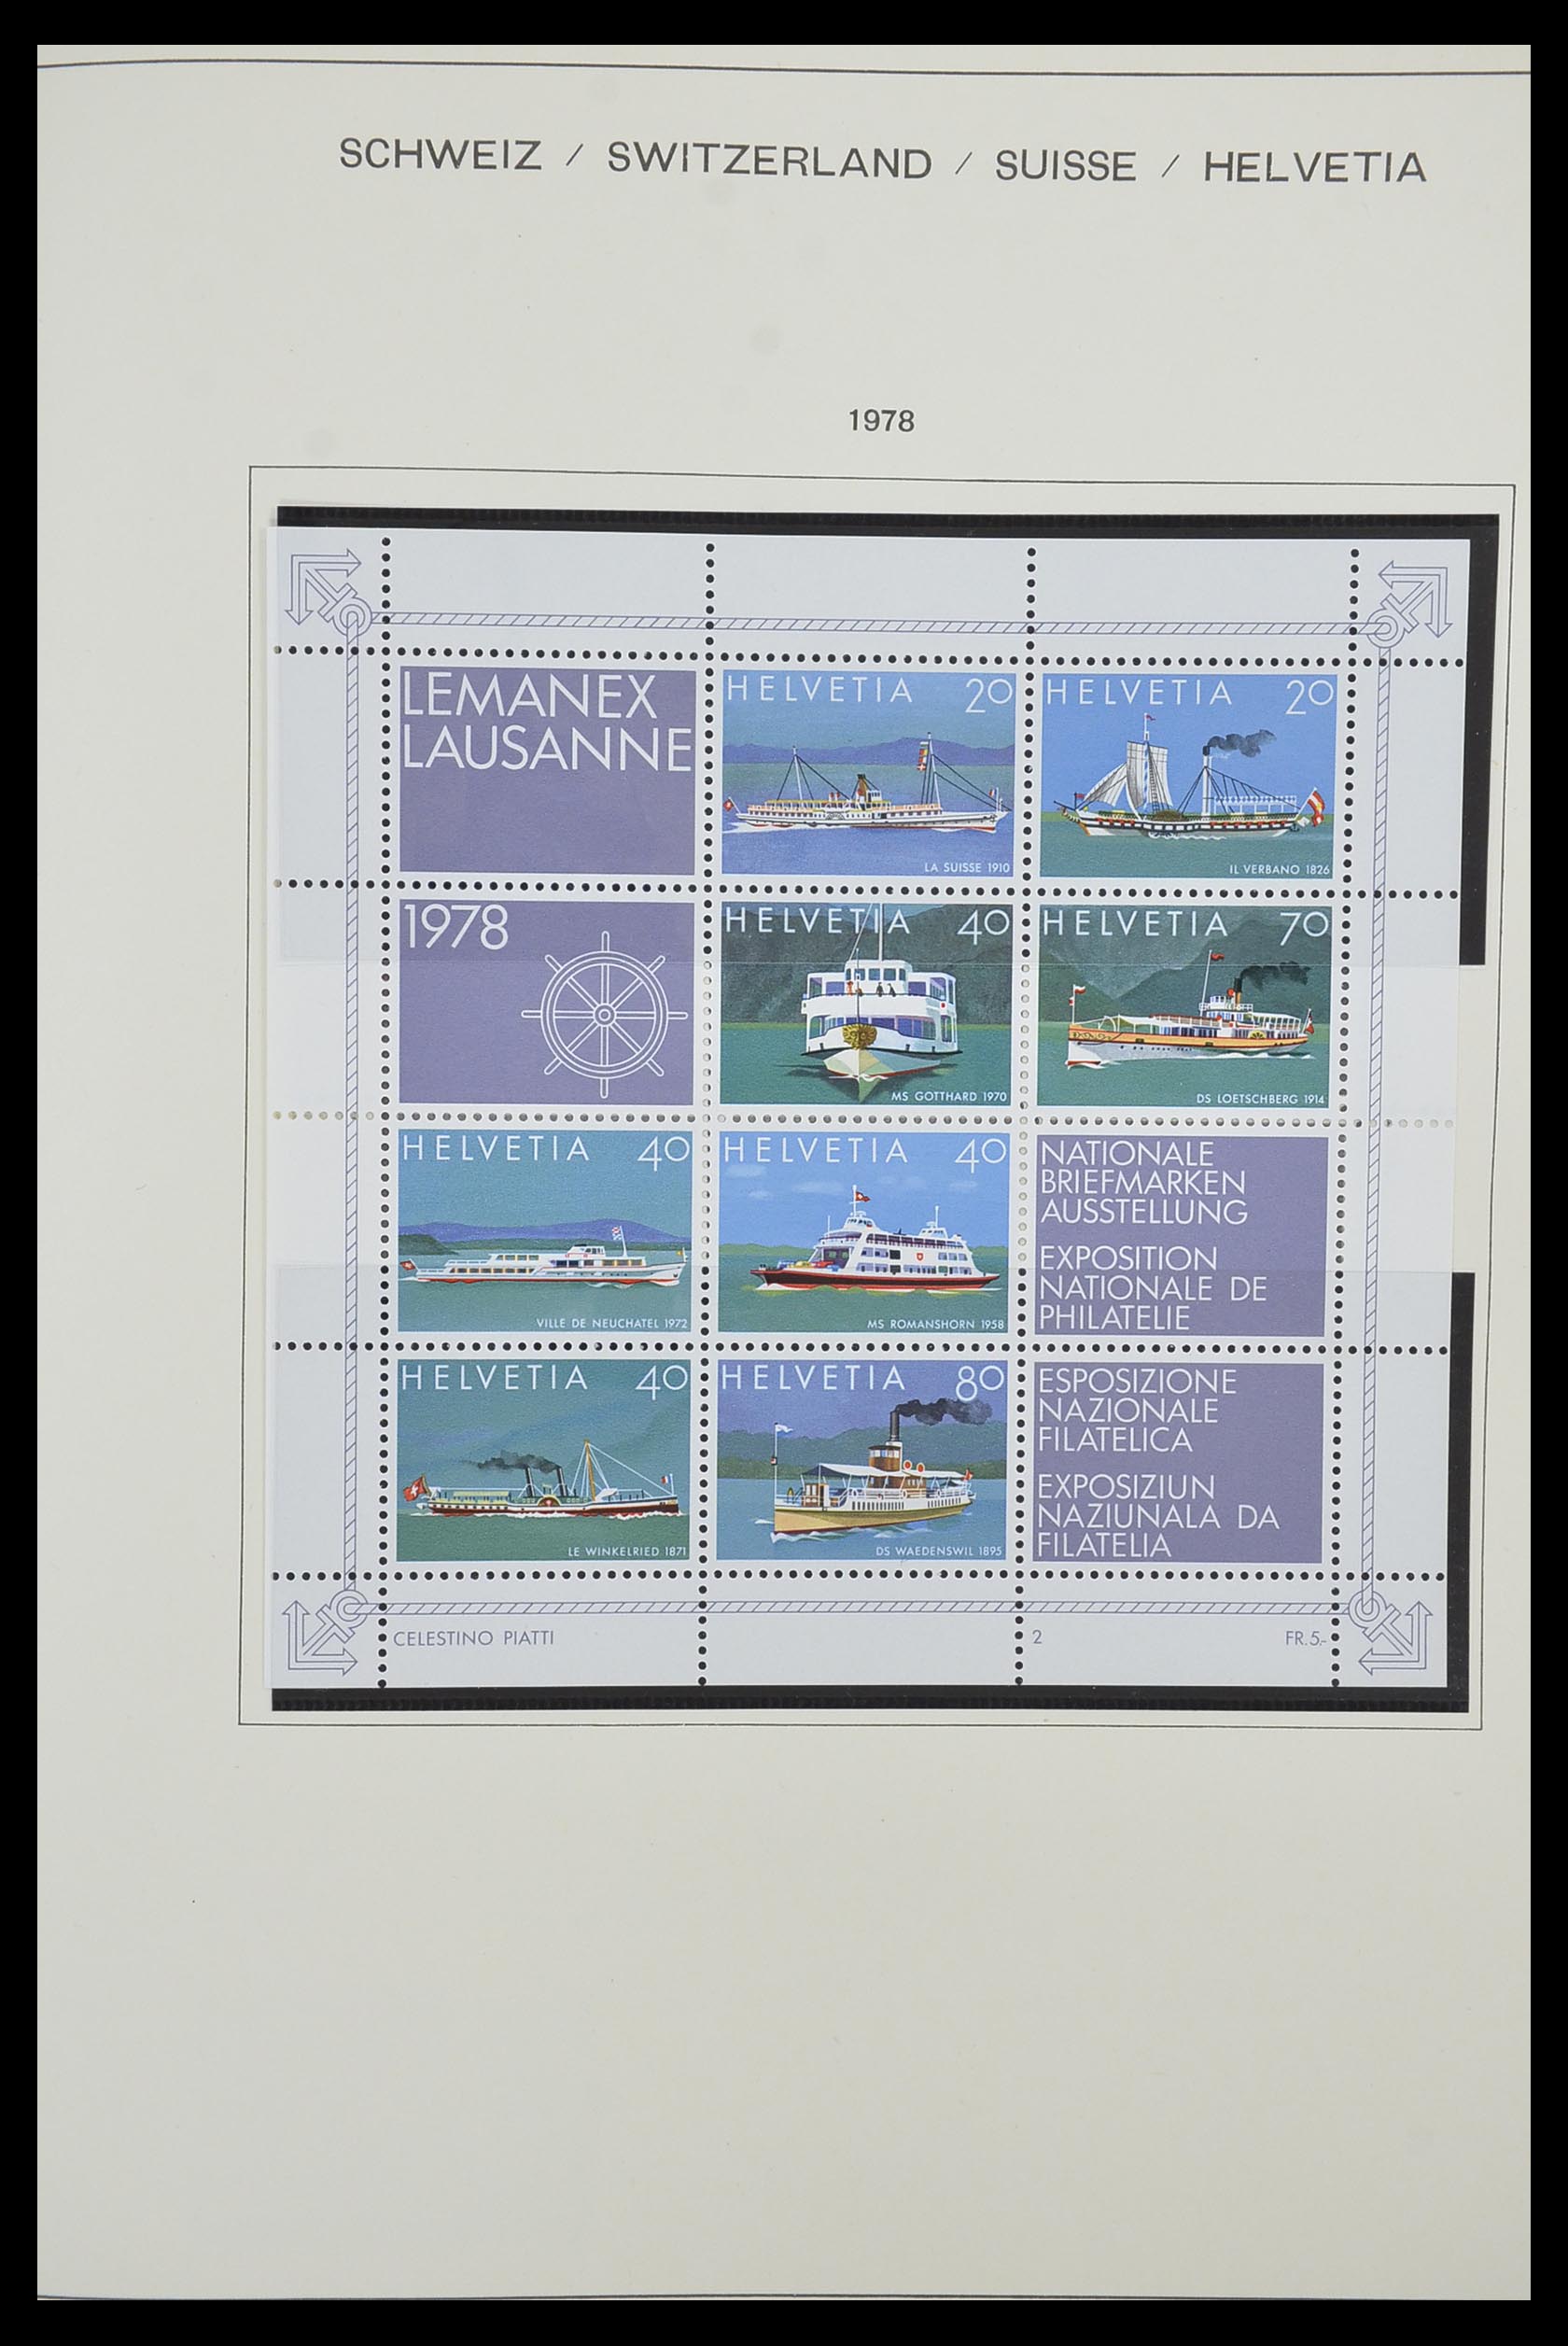 33601 093 - Stamp collection 33601 Switzerland 1854-1985.